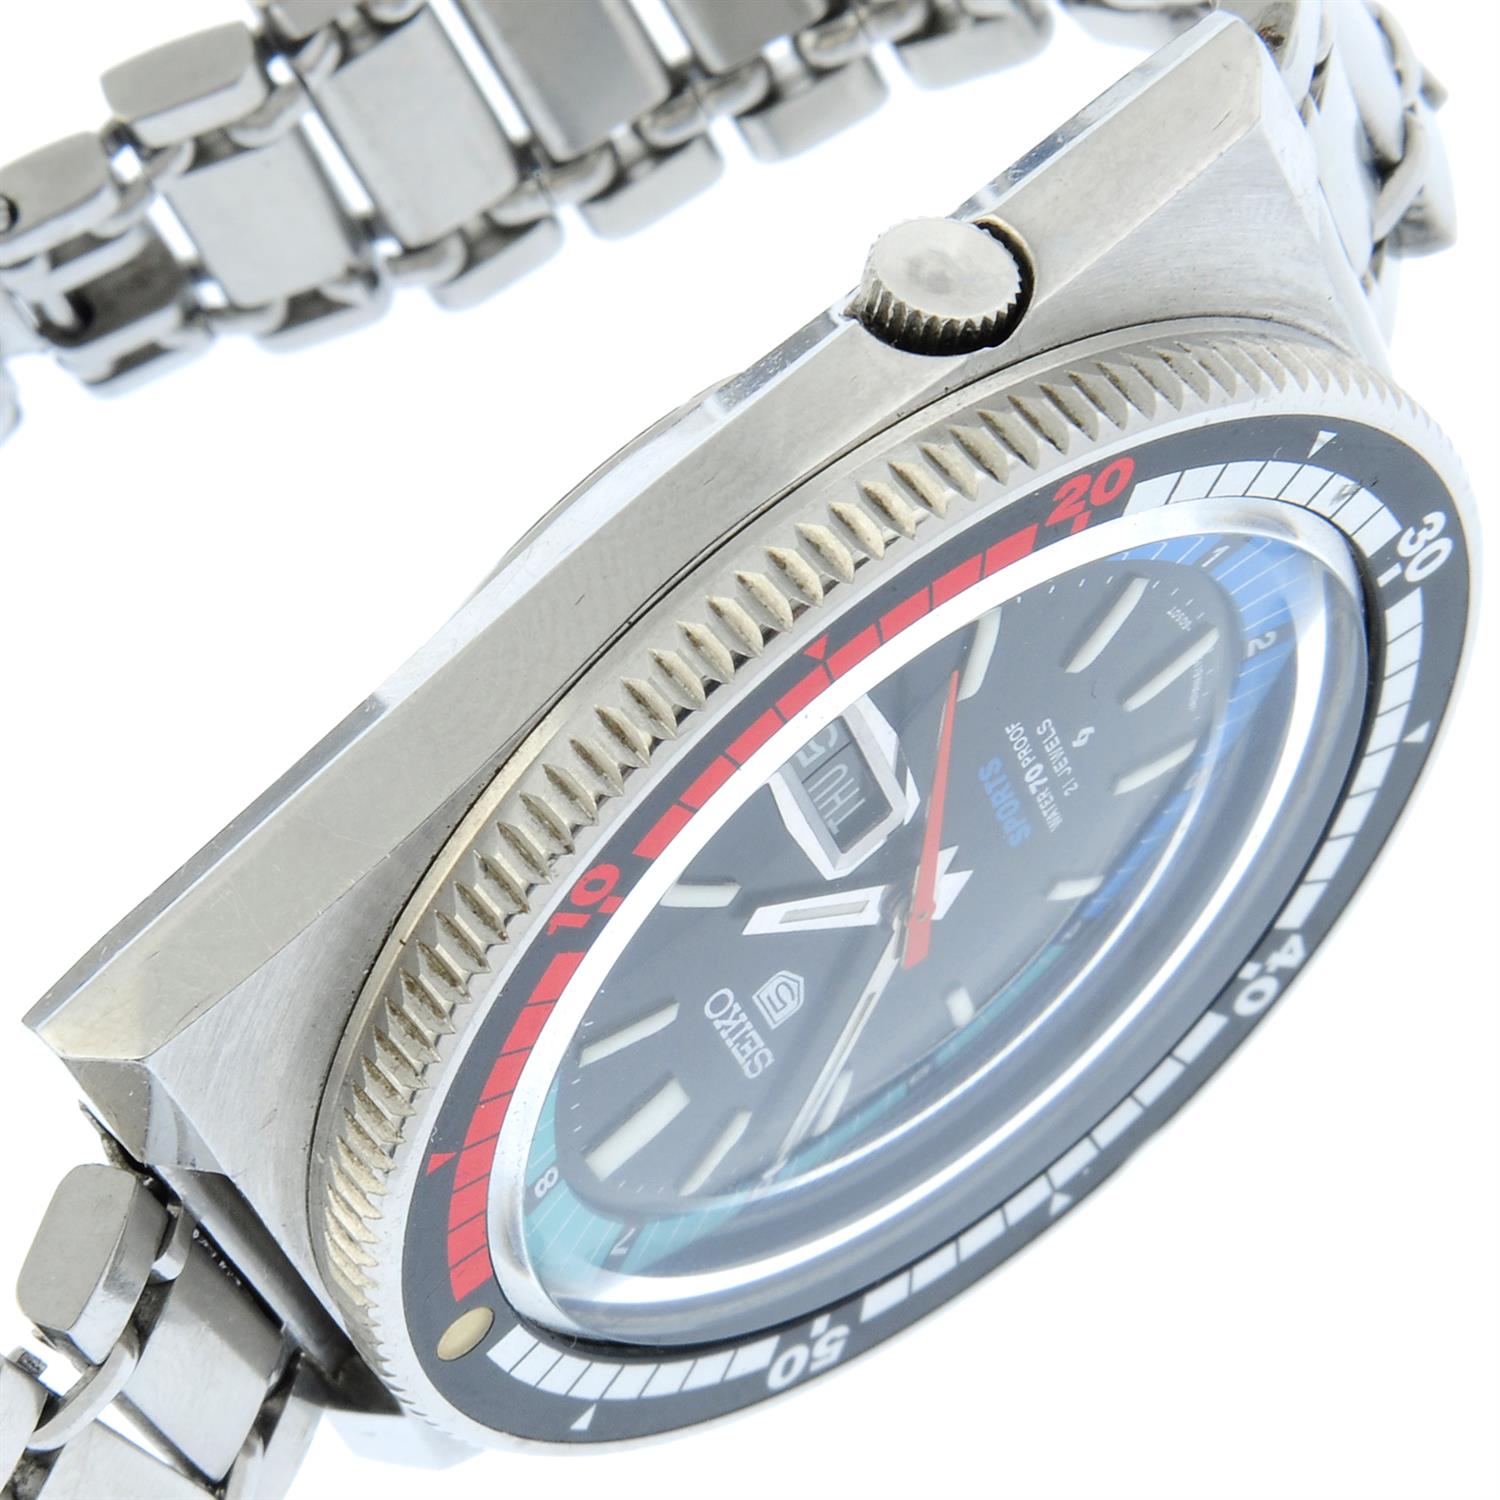 Seiko - a Sport 'Regatta' watch, 41mm. - Image 3 of 4